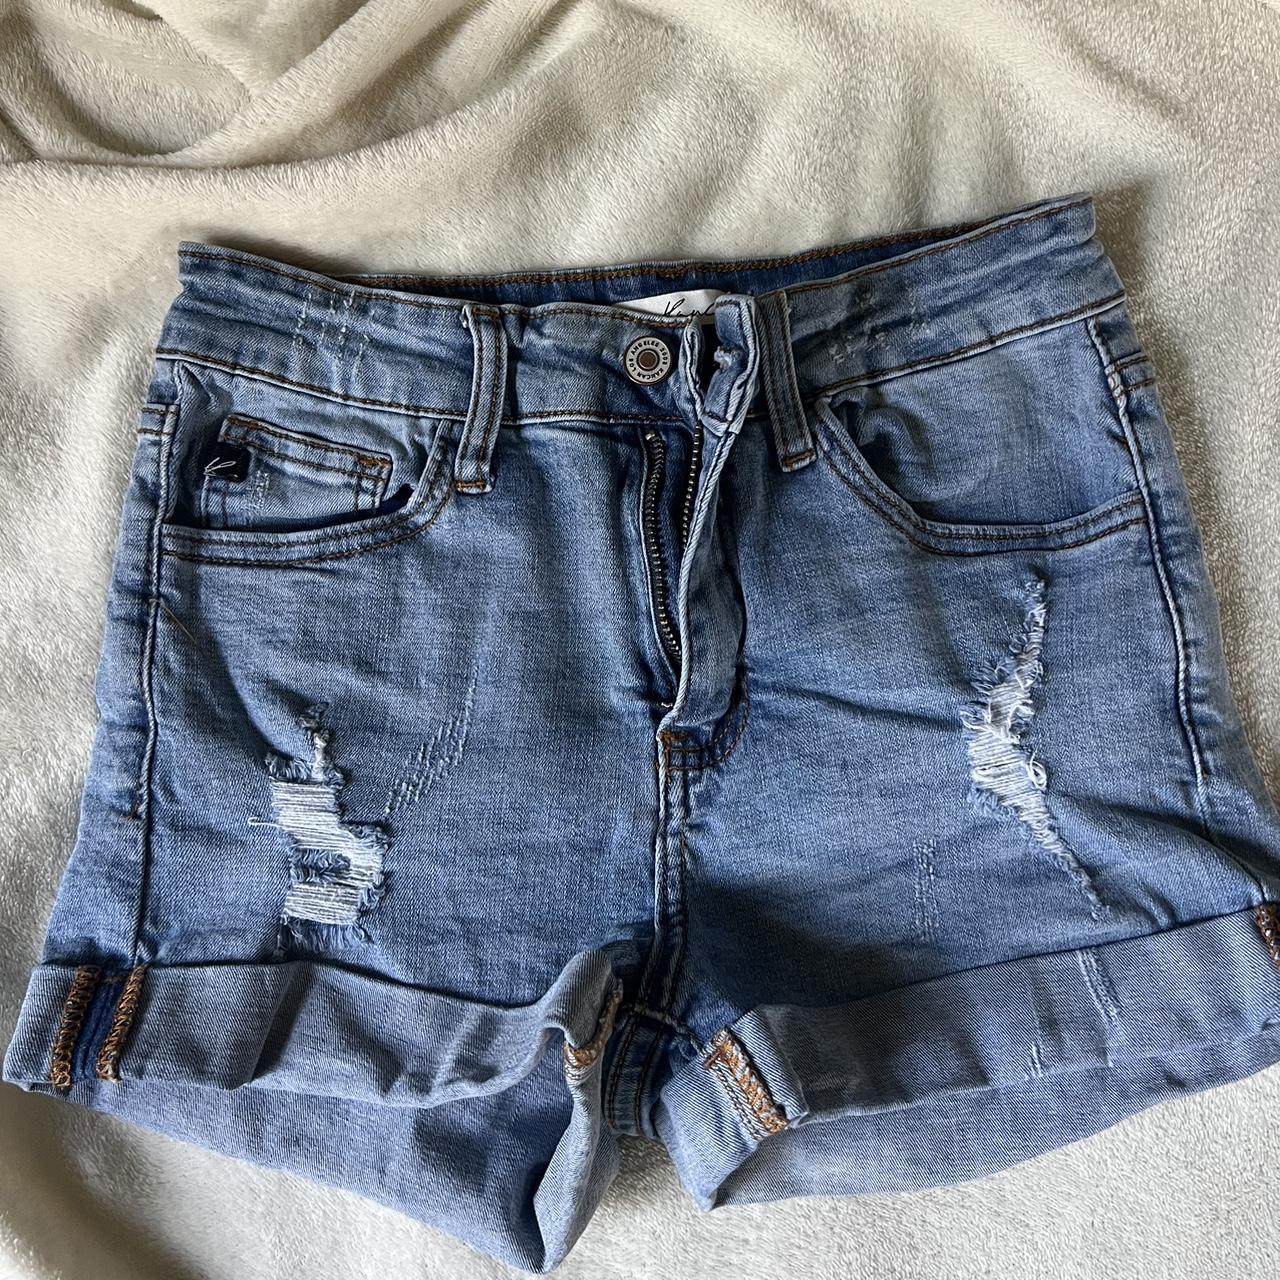 Distressed Cuffed Jean Shorts